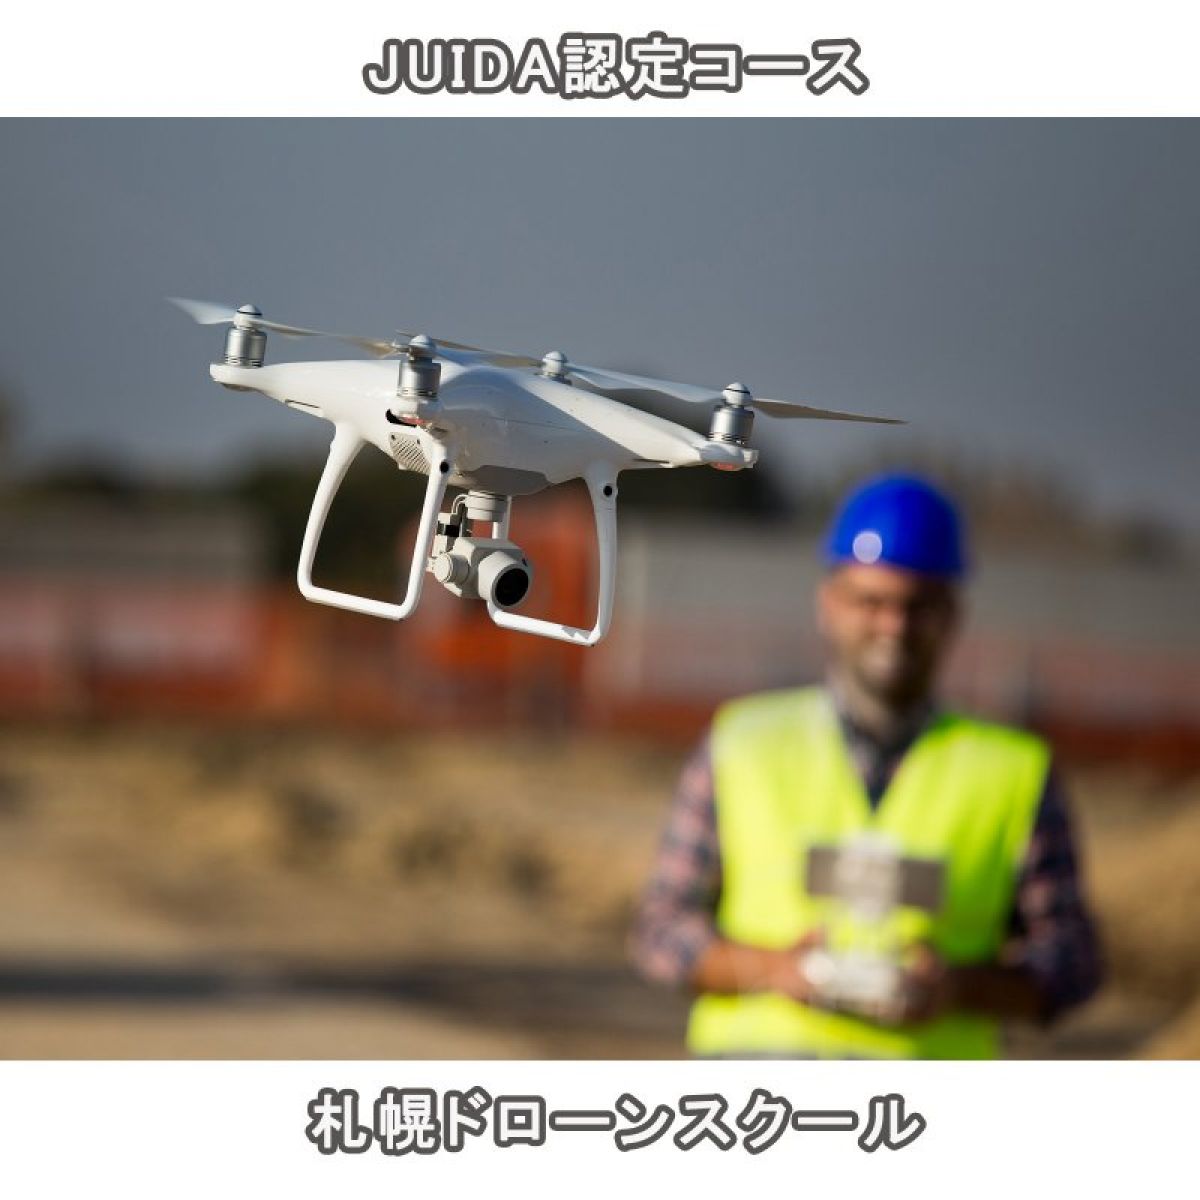 JUIDA認定「無人航空機・操縦技能証明/安全運行管理講習」３日間コース